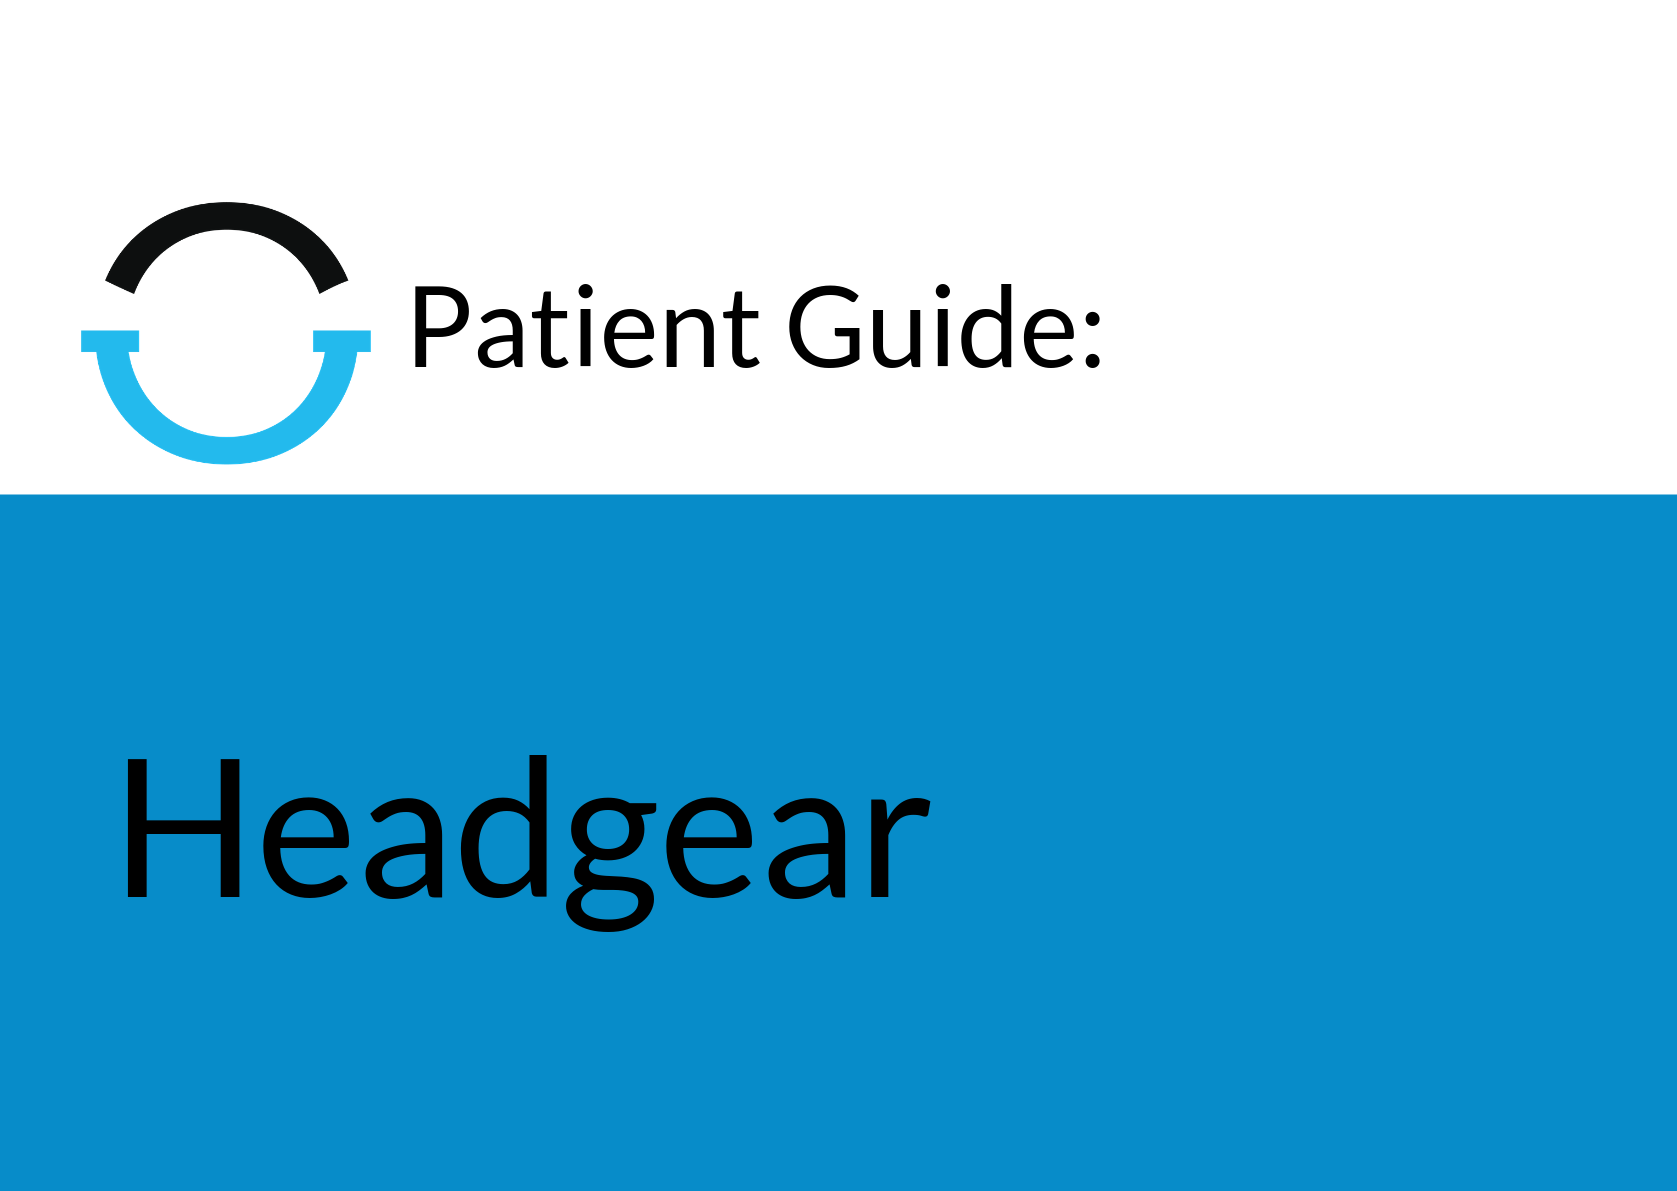 Patient Guide Header Image – Headgear LARGE